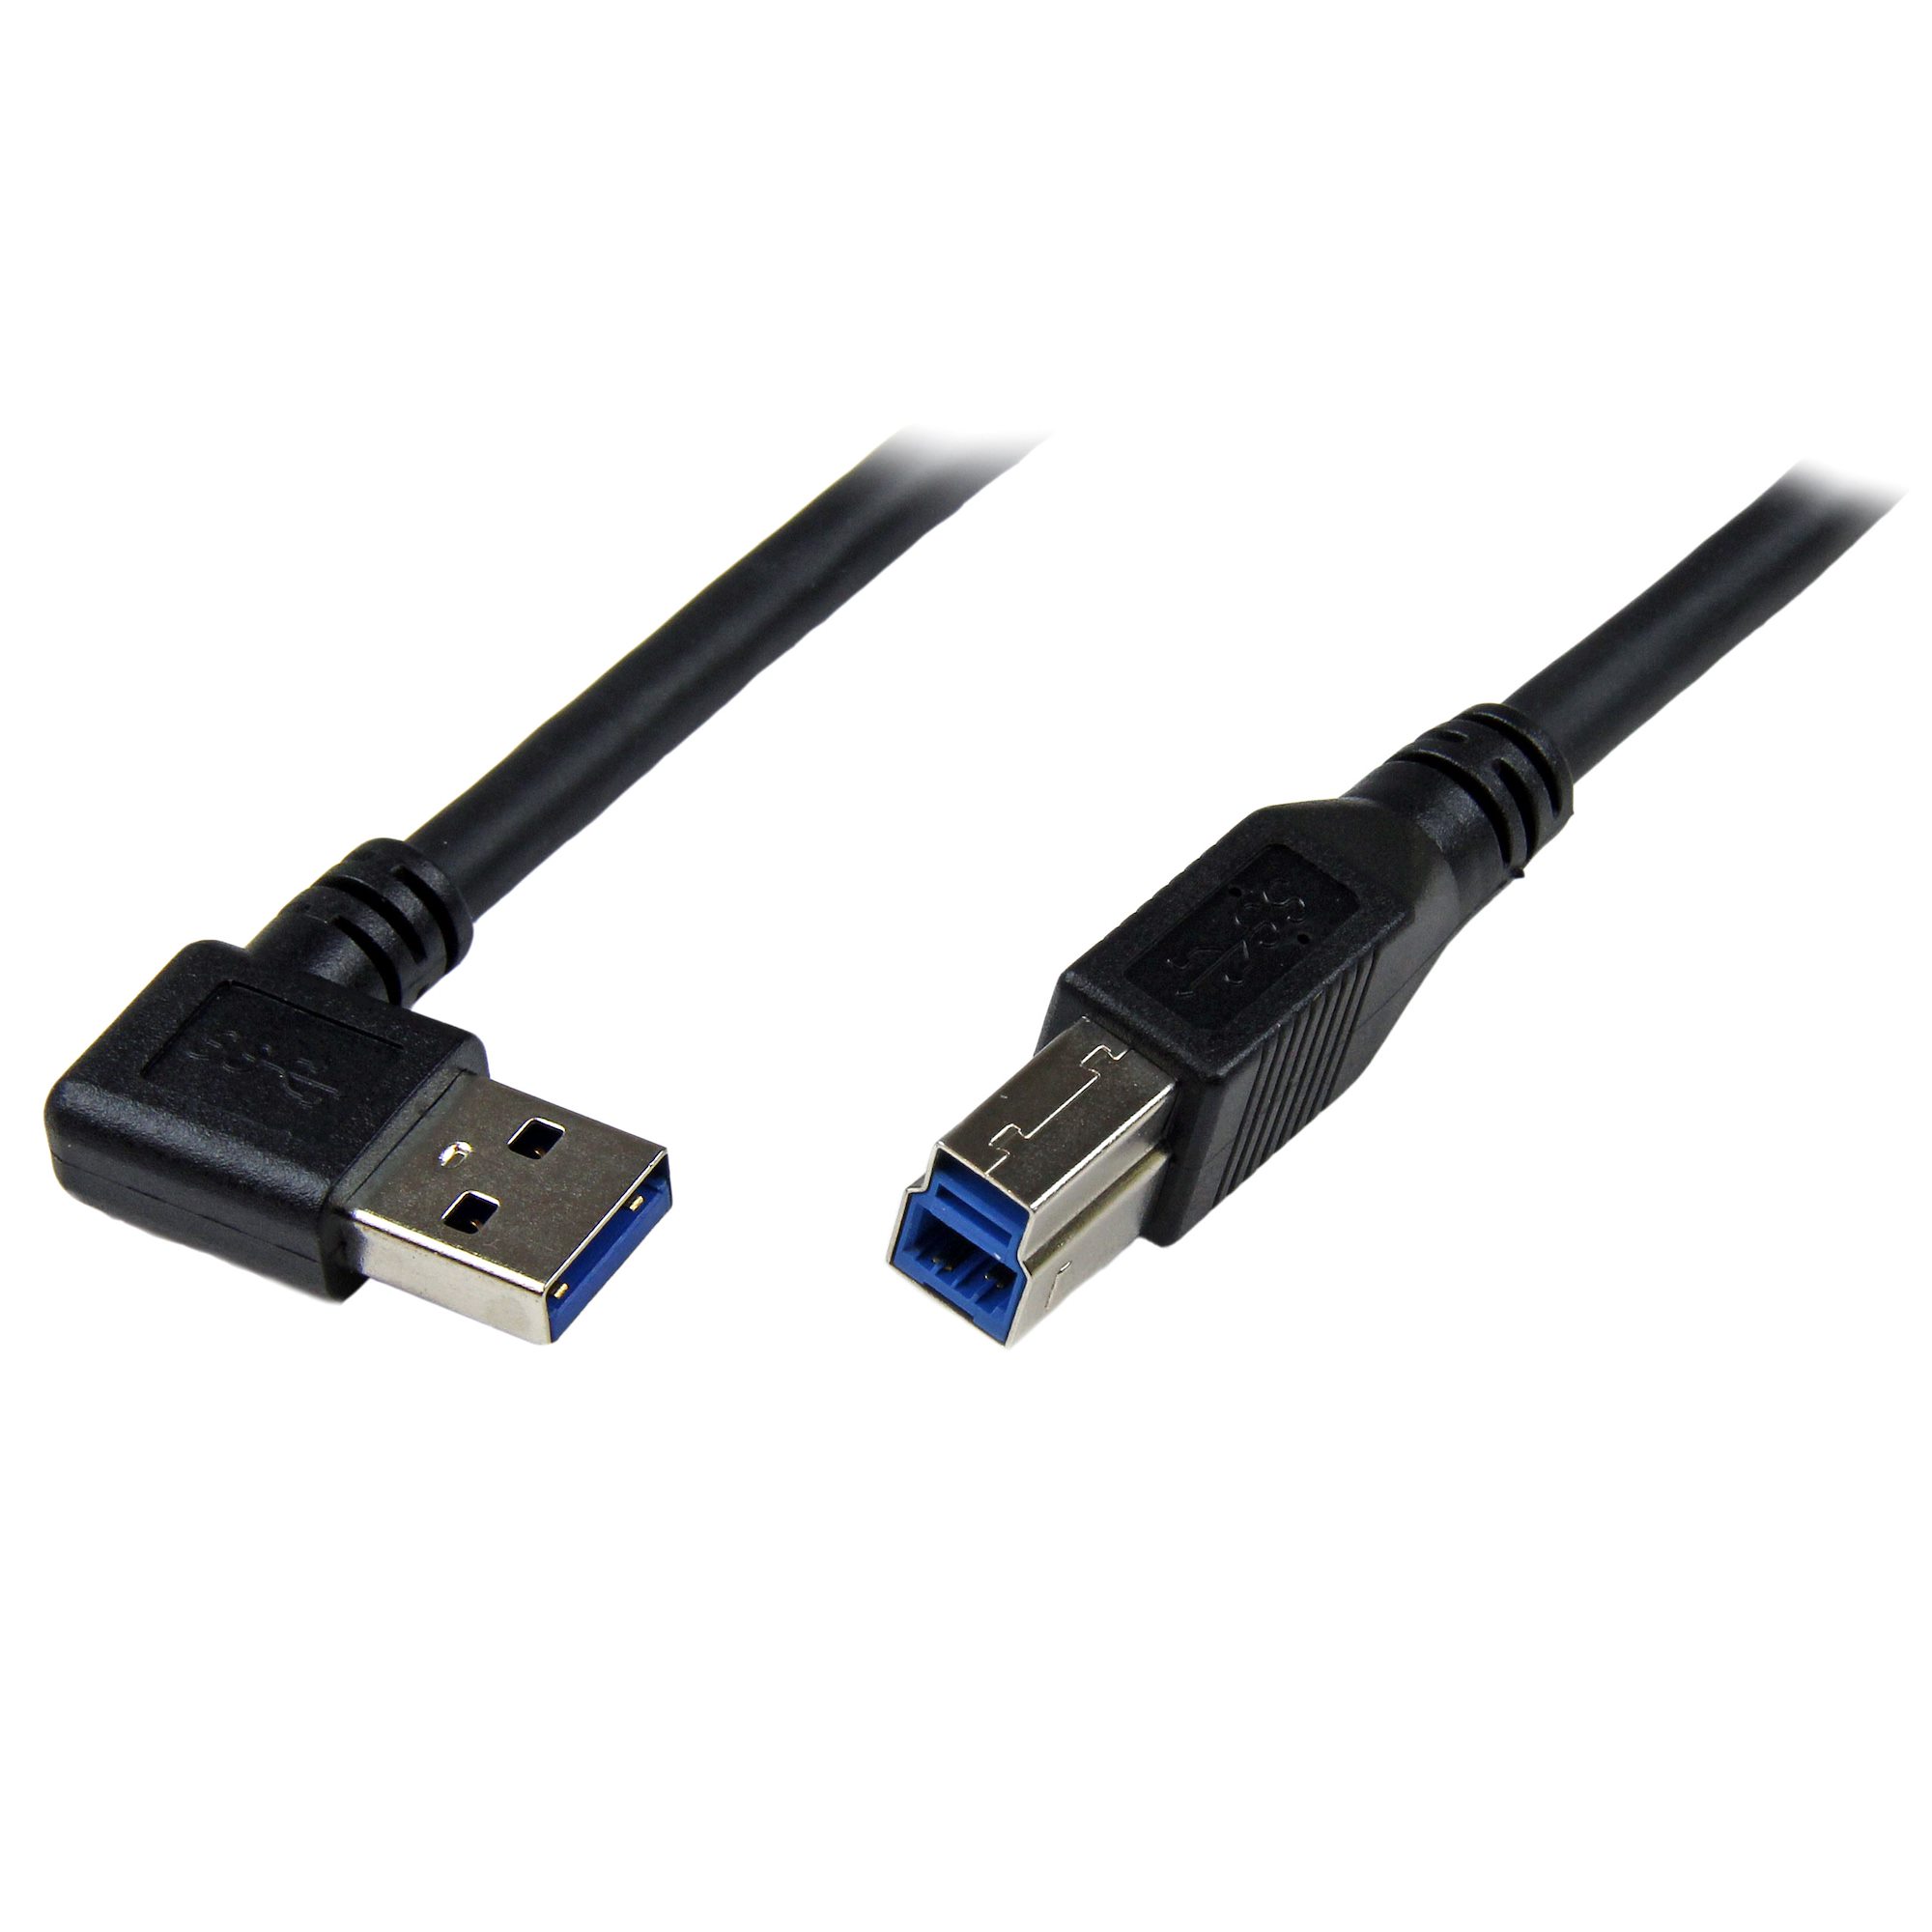 Nucleair Eigen Bitterheid 1m Black USB 3 Cable Right Angle A to B - USB 3.0 Cables | StarTech.com